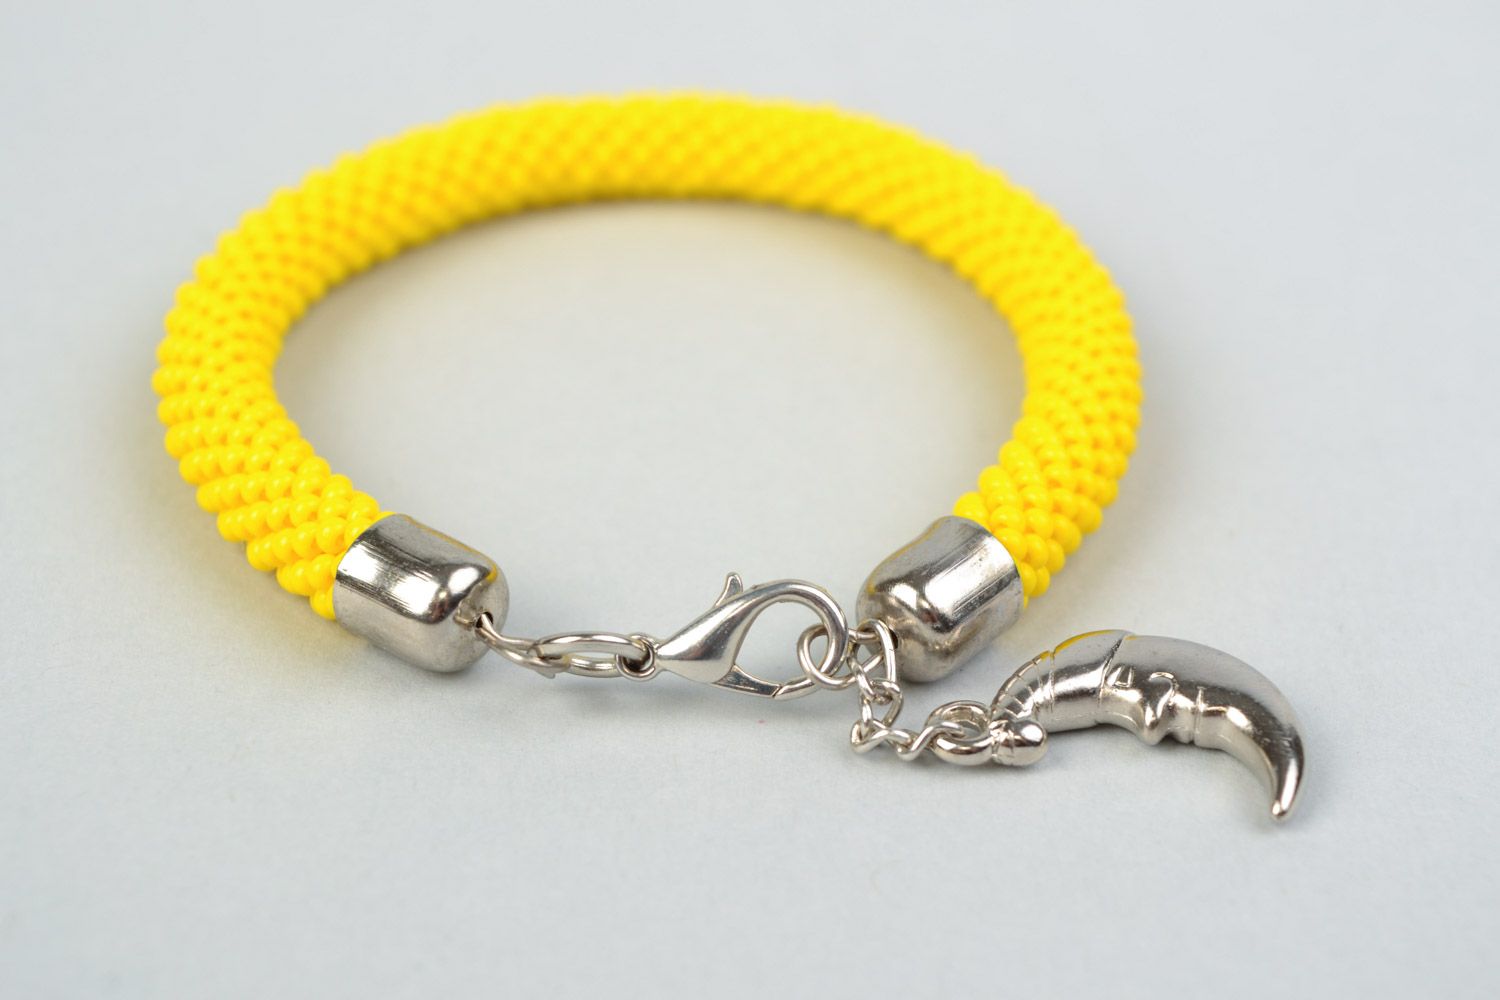 Handmade bright yellow beaded cord wrist bracelet with metal charm photo 4